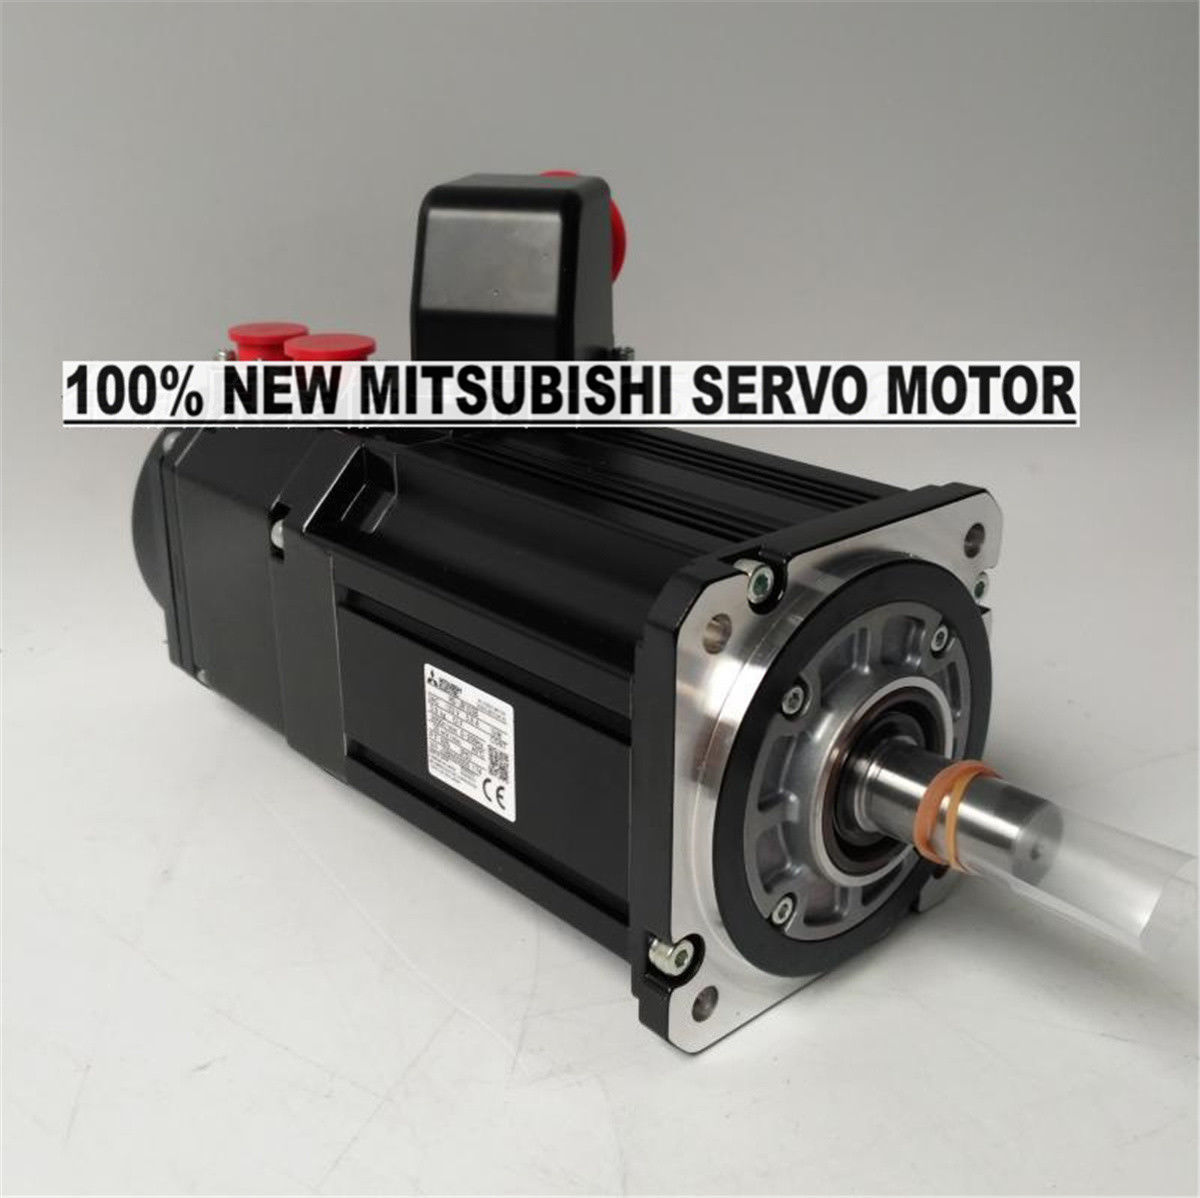 Brand NEW Mitsubishi Servo Motor HG-JR103B in box HGJR103B - Click Image to Close